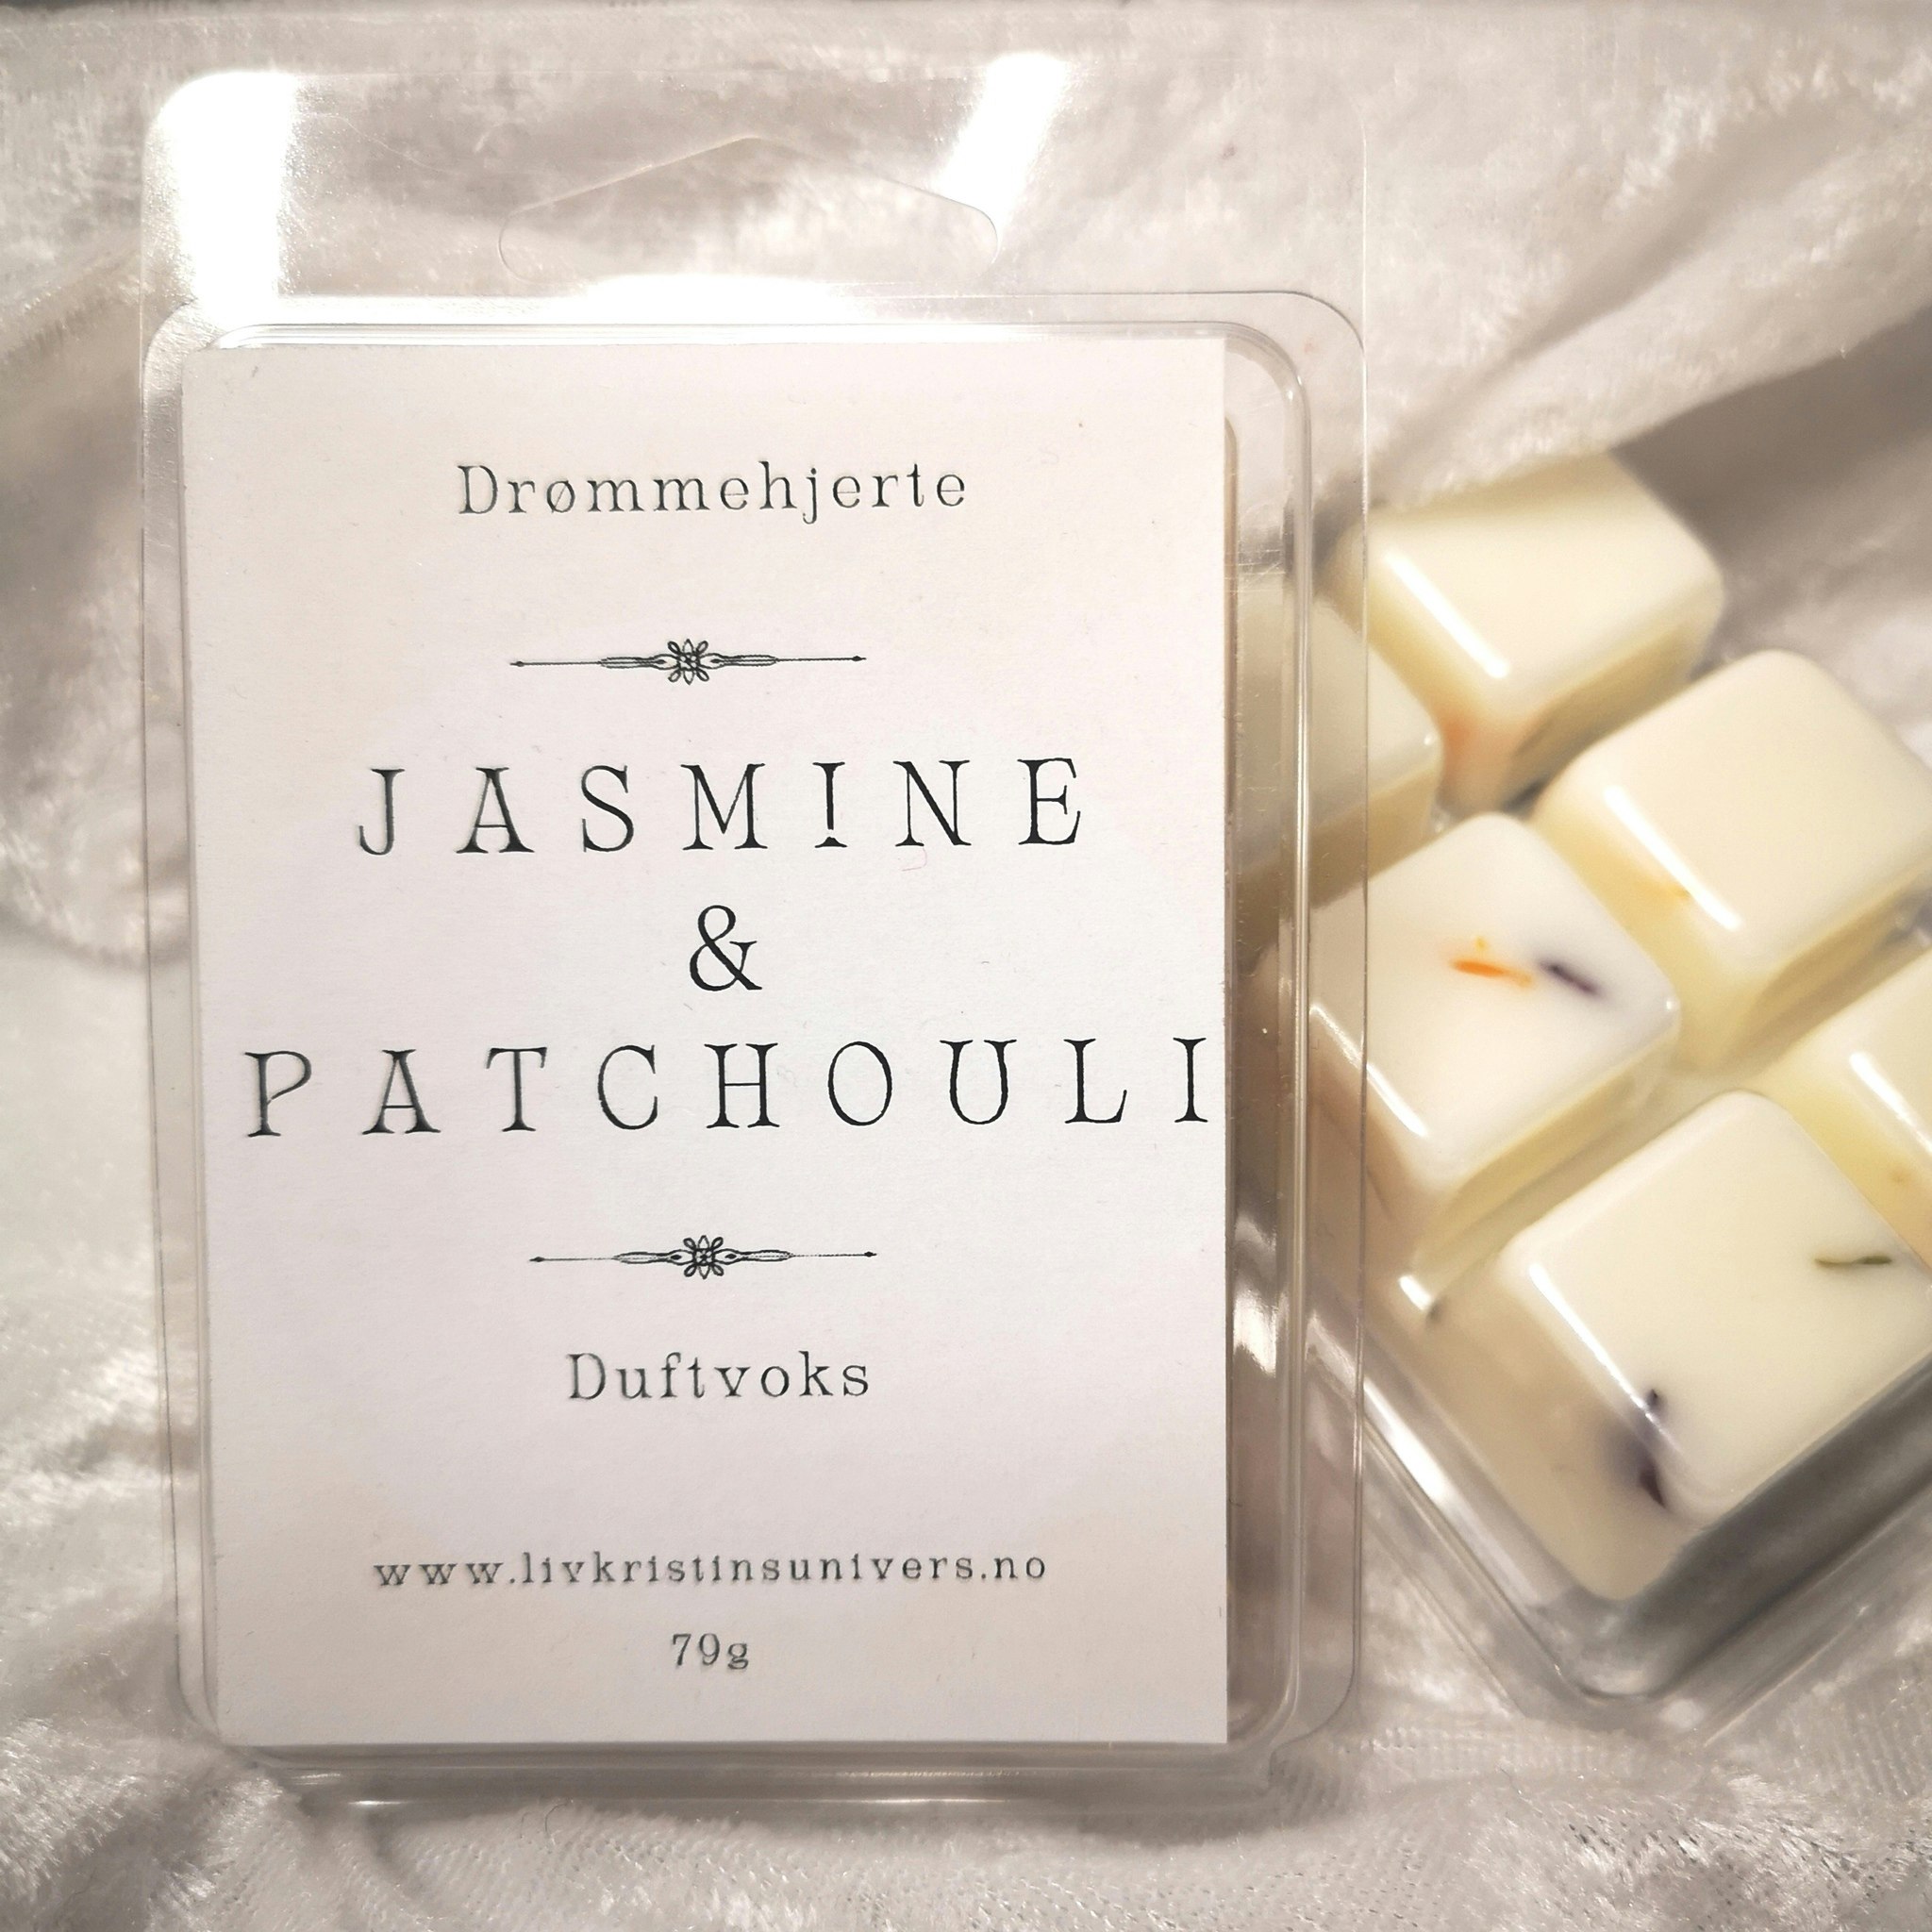 Jasmine & Patchouli.